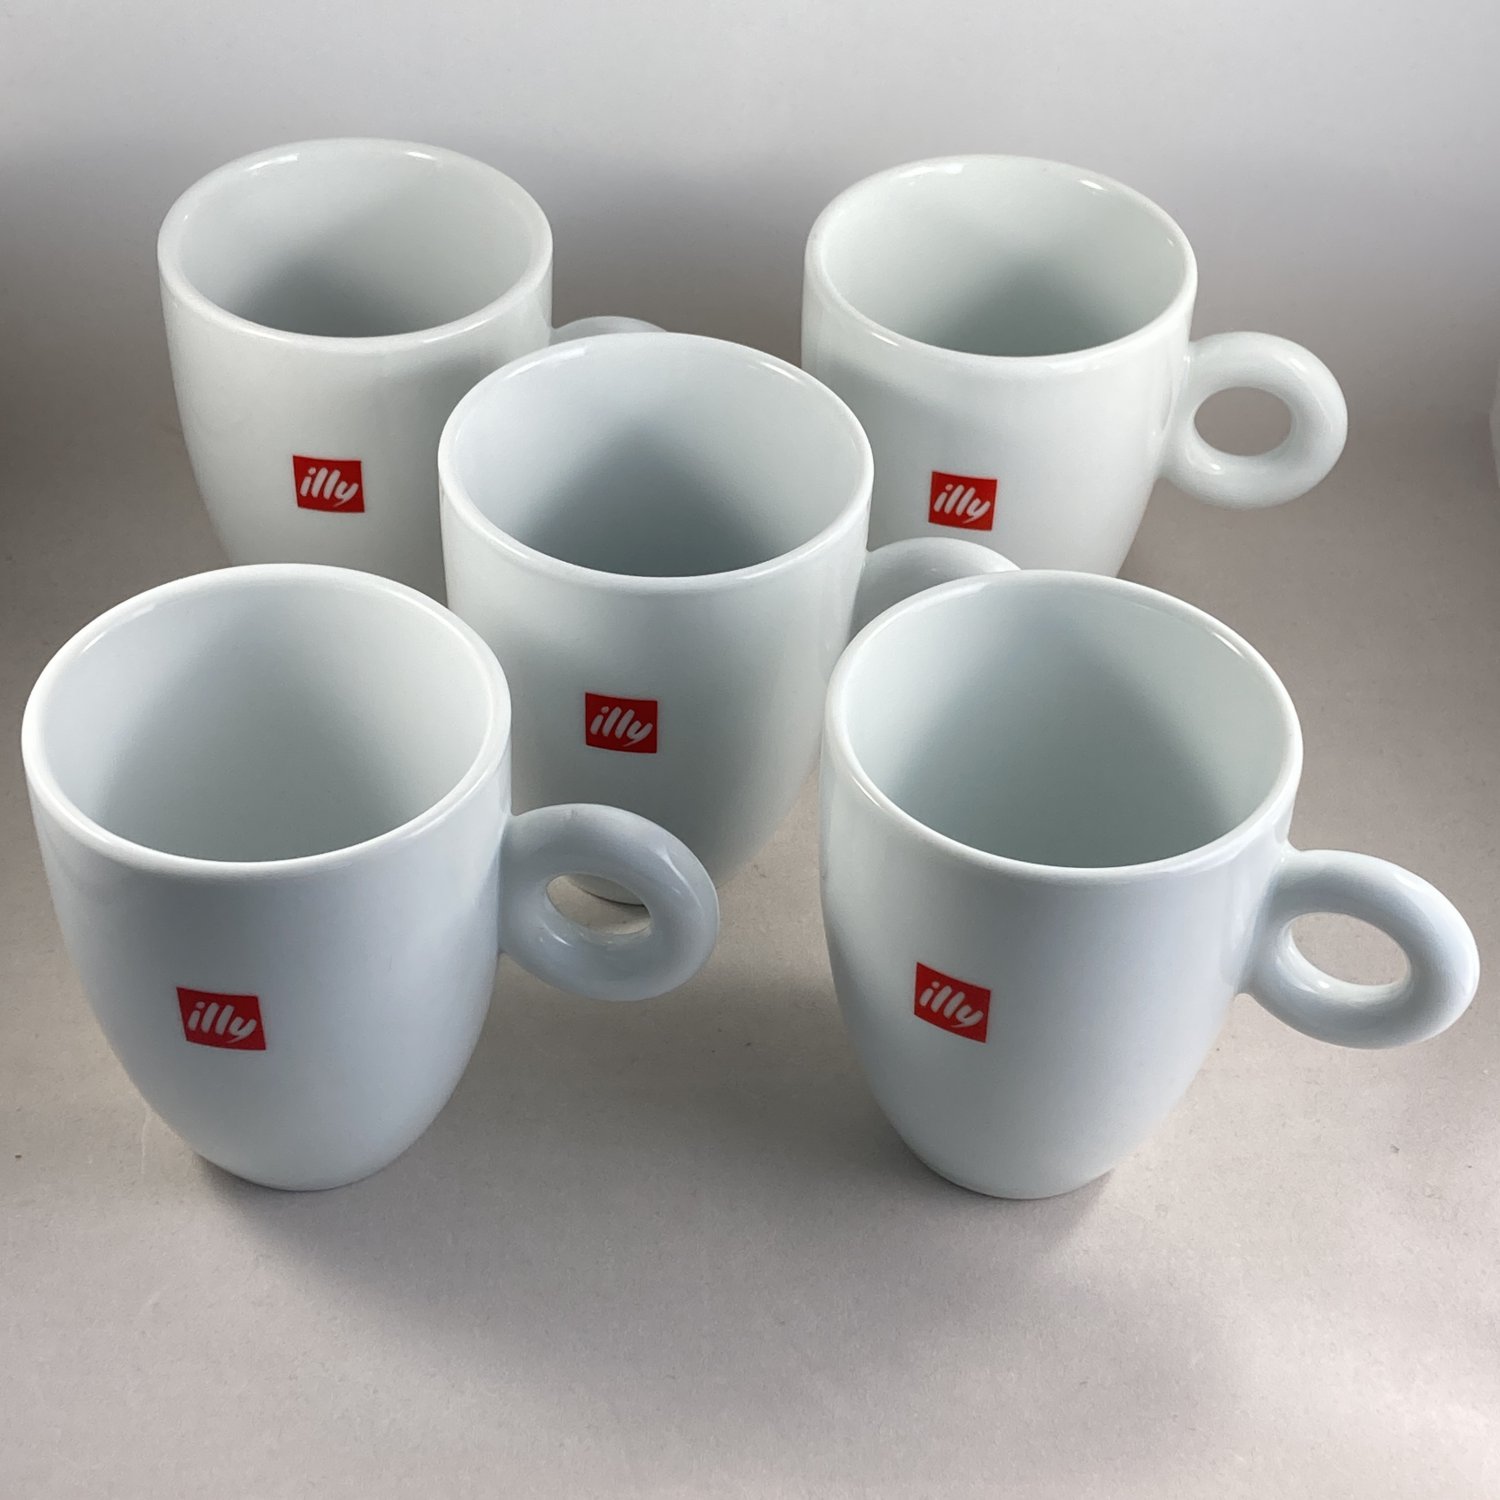 illy Logo Coffee Cup set of 5 - 8 oz IPA Italy EUC